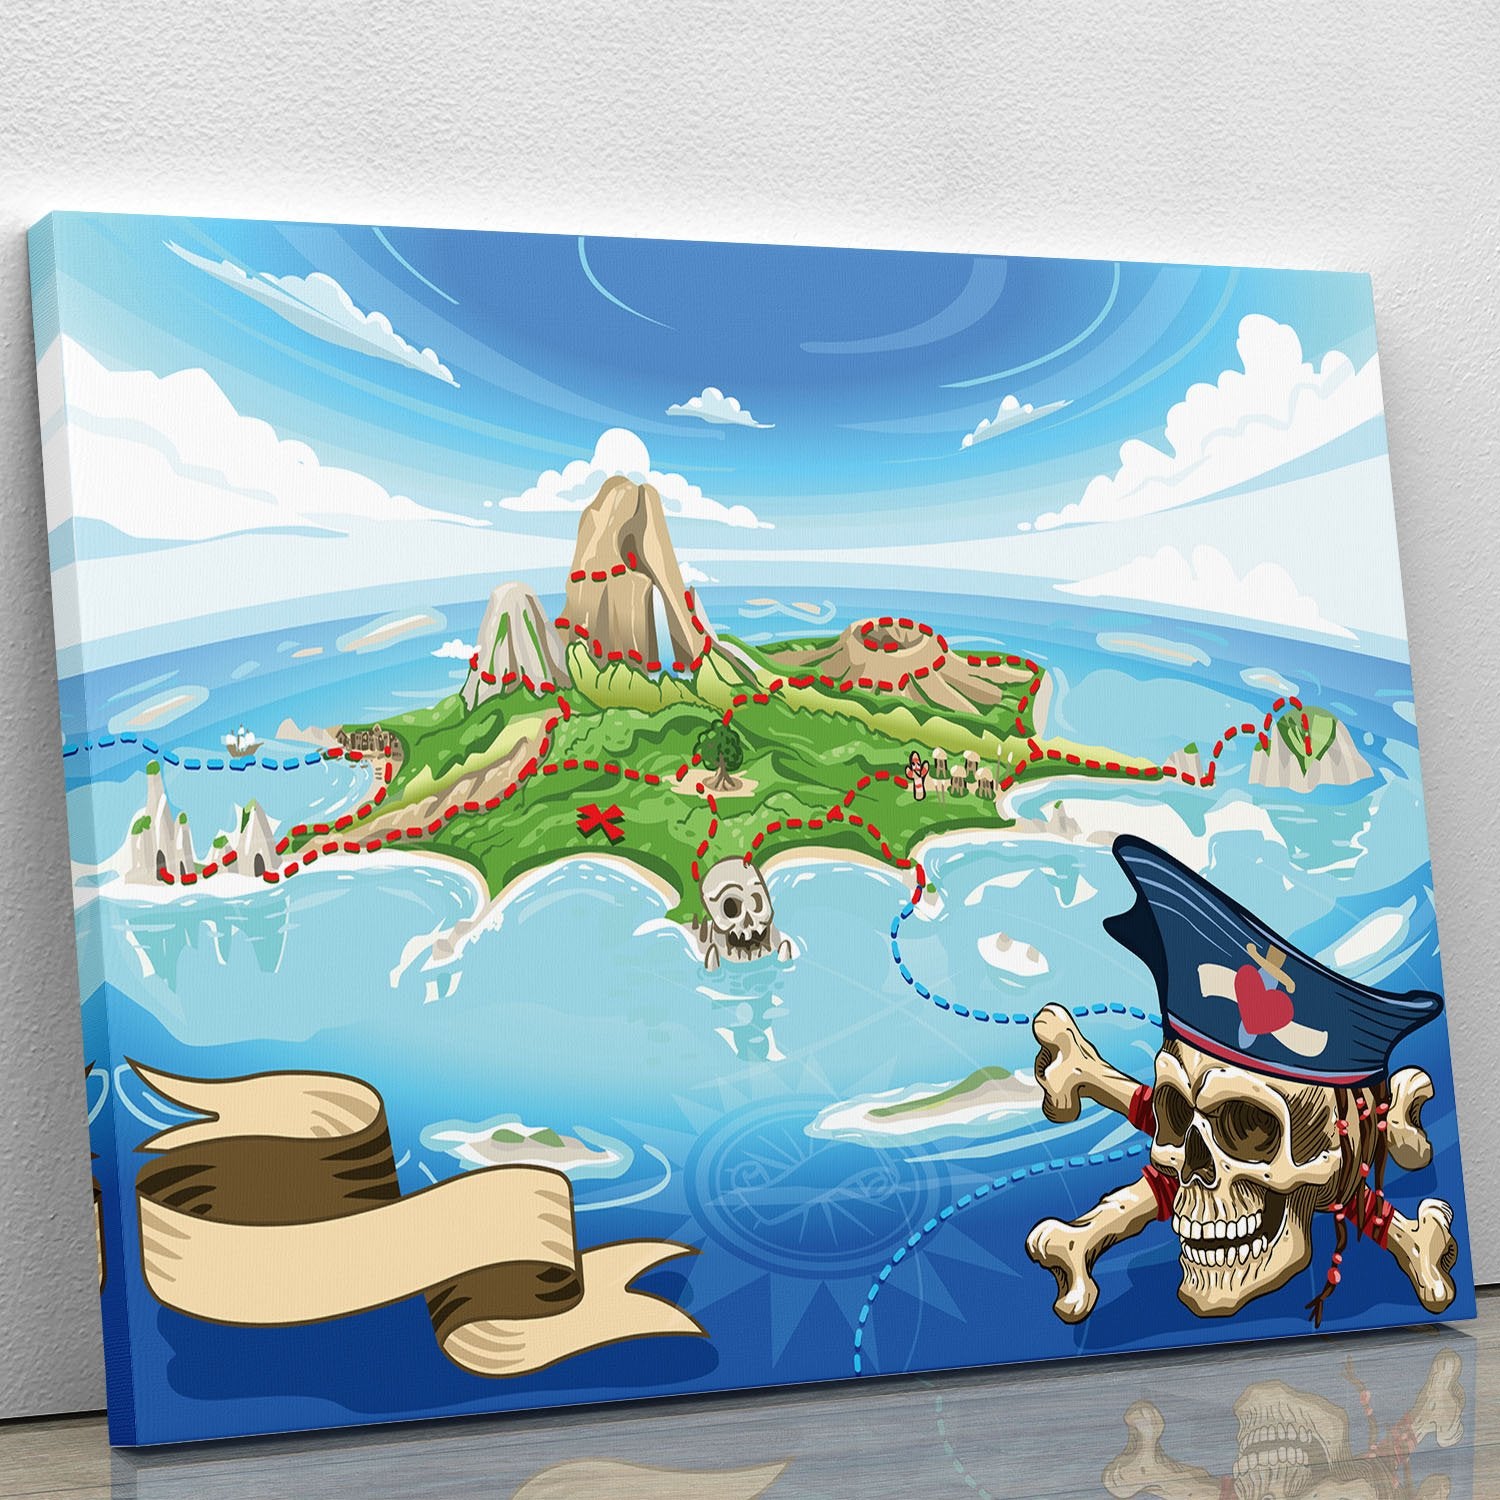 Pirate Cove Island Treasure Map Canvas Print or Poster